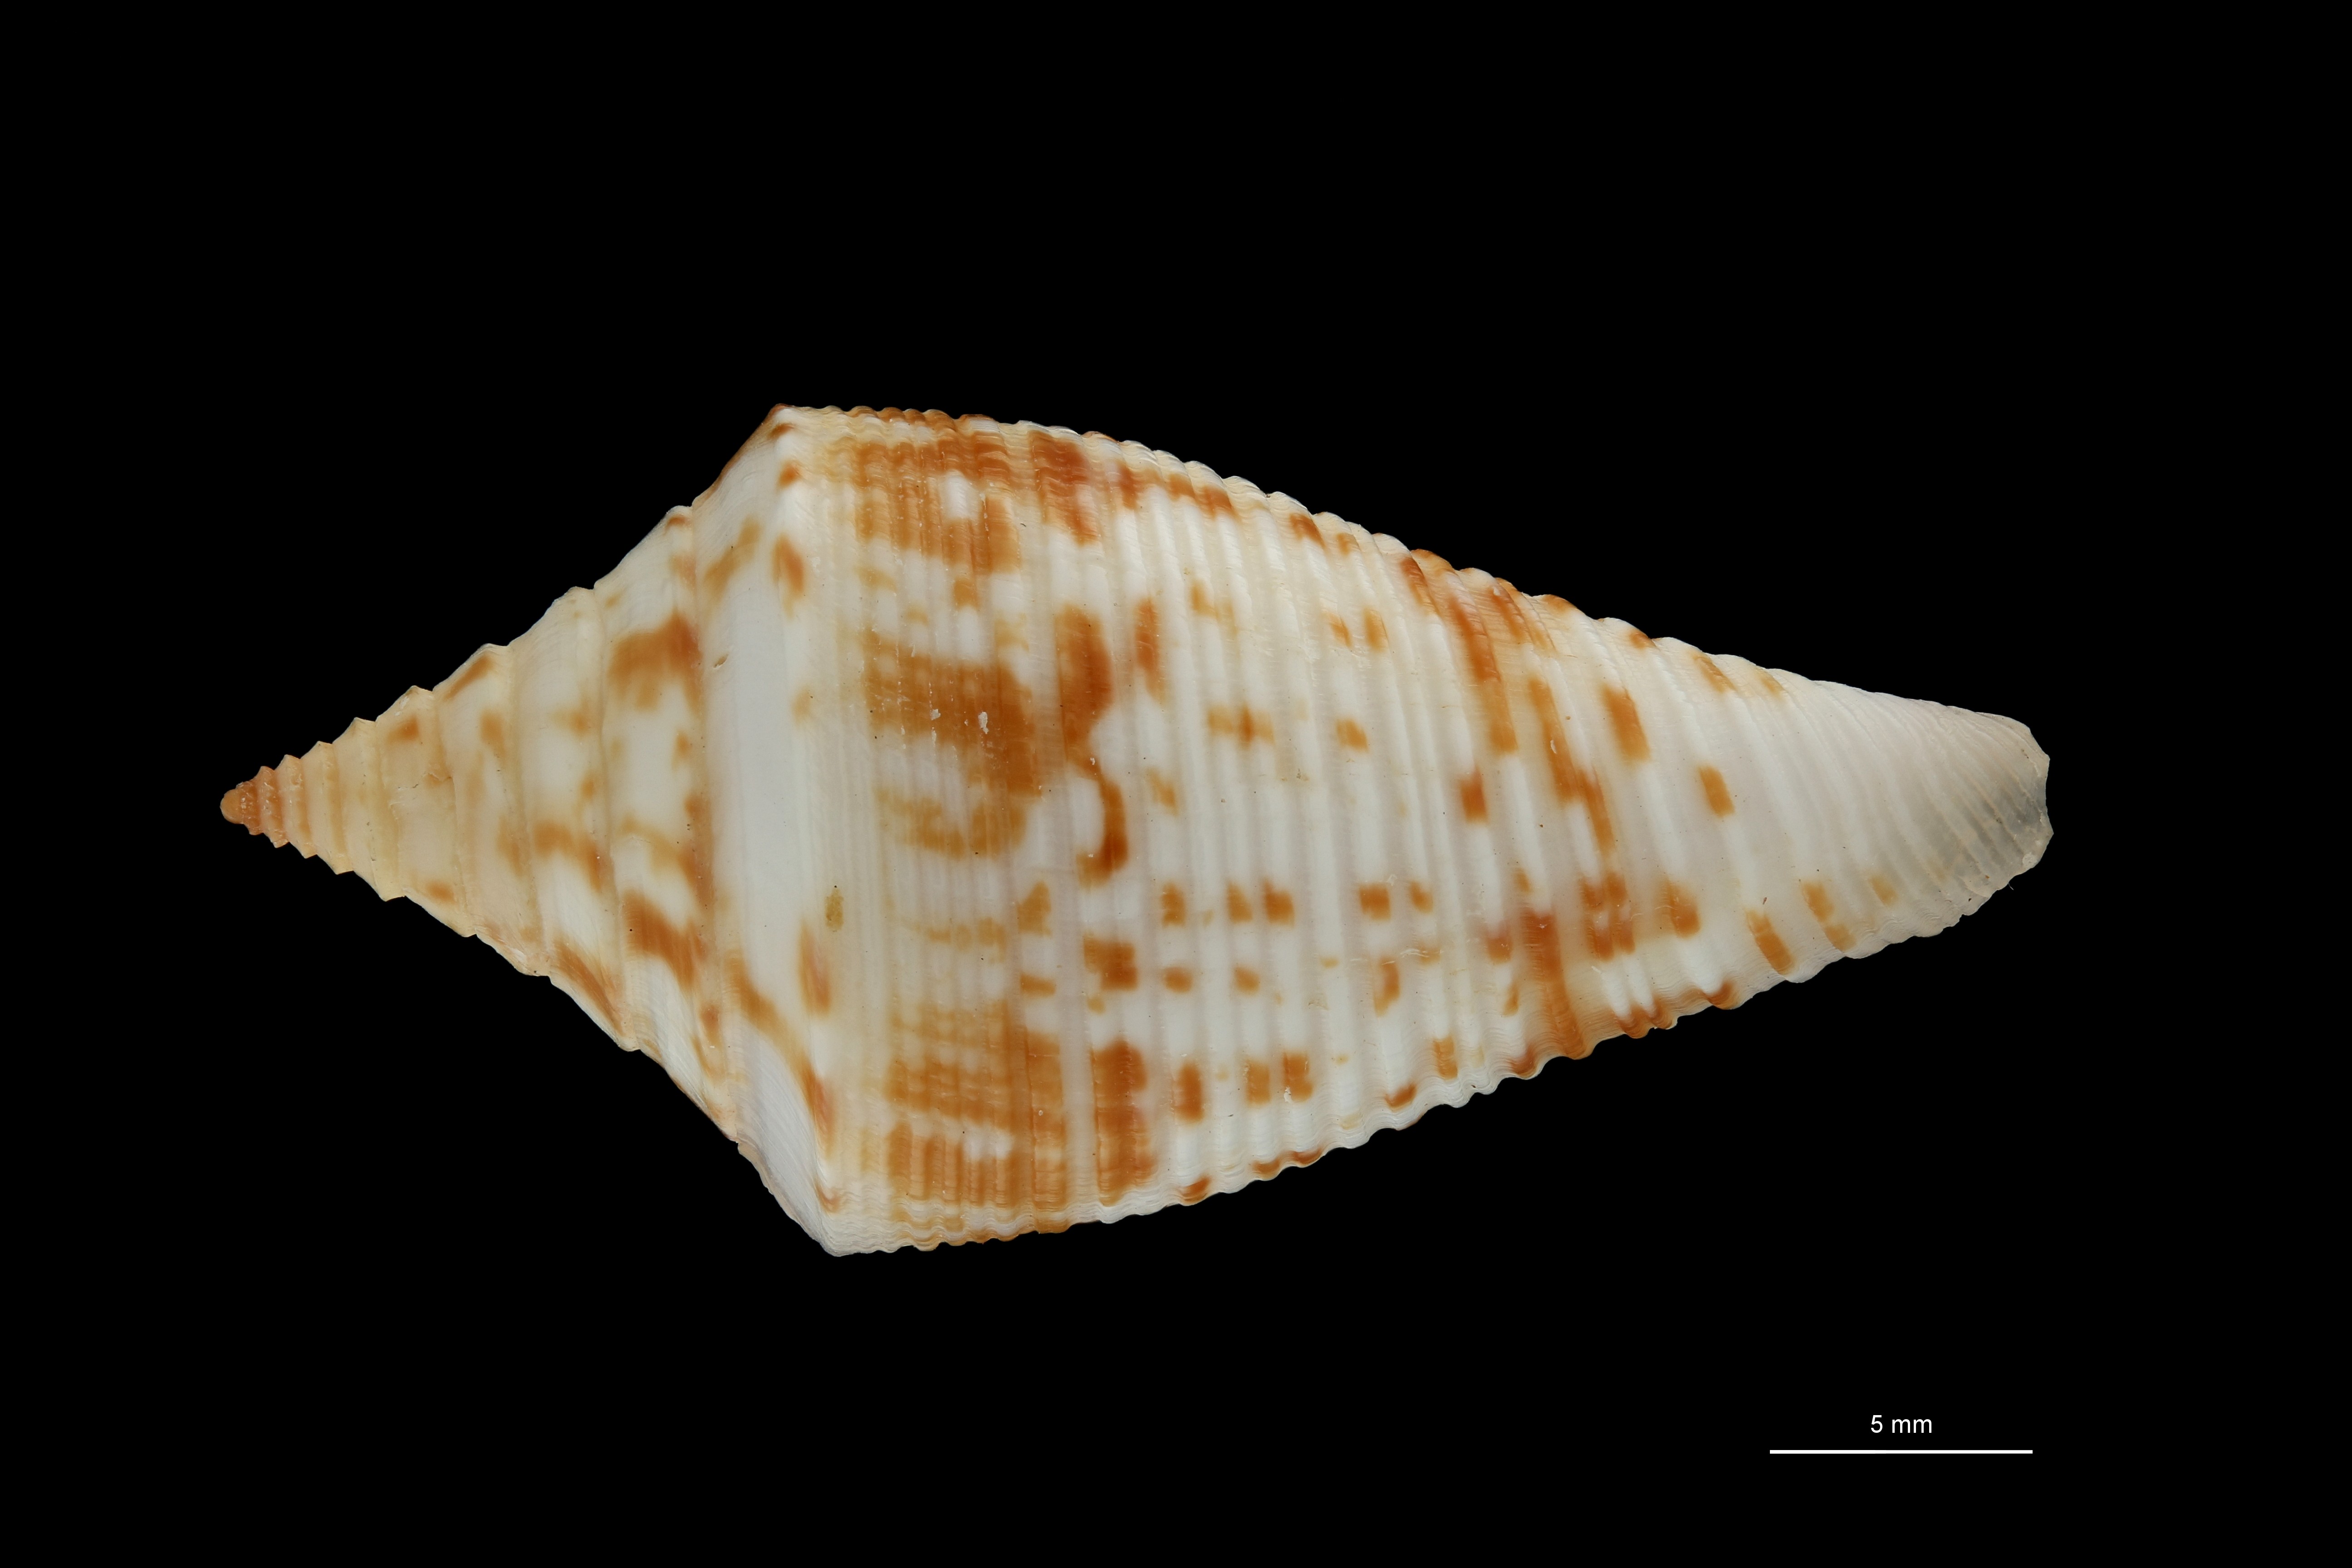 BE-RBINS-INV PARATYPE MT.3049 Conus rostratus DORSAL ZS PMax Scaled.jpg